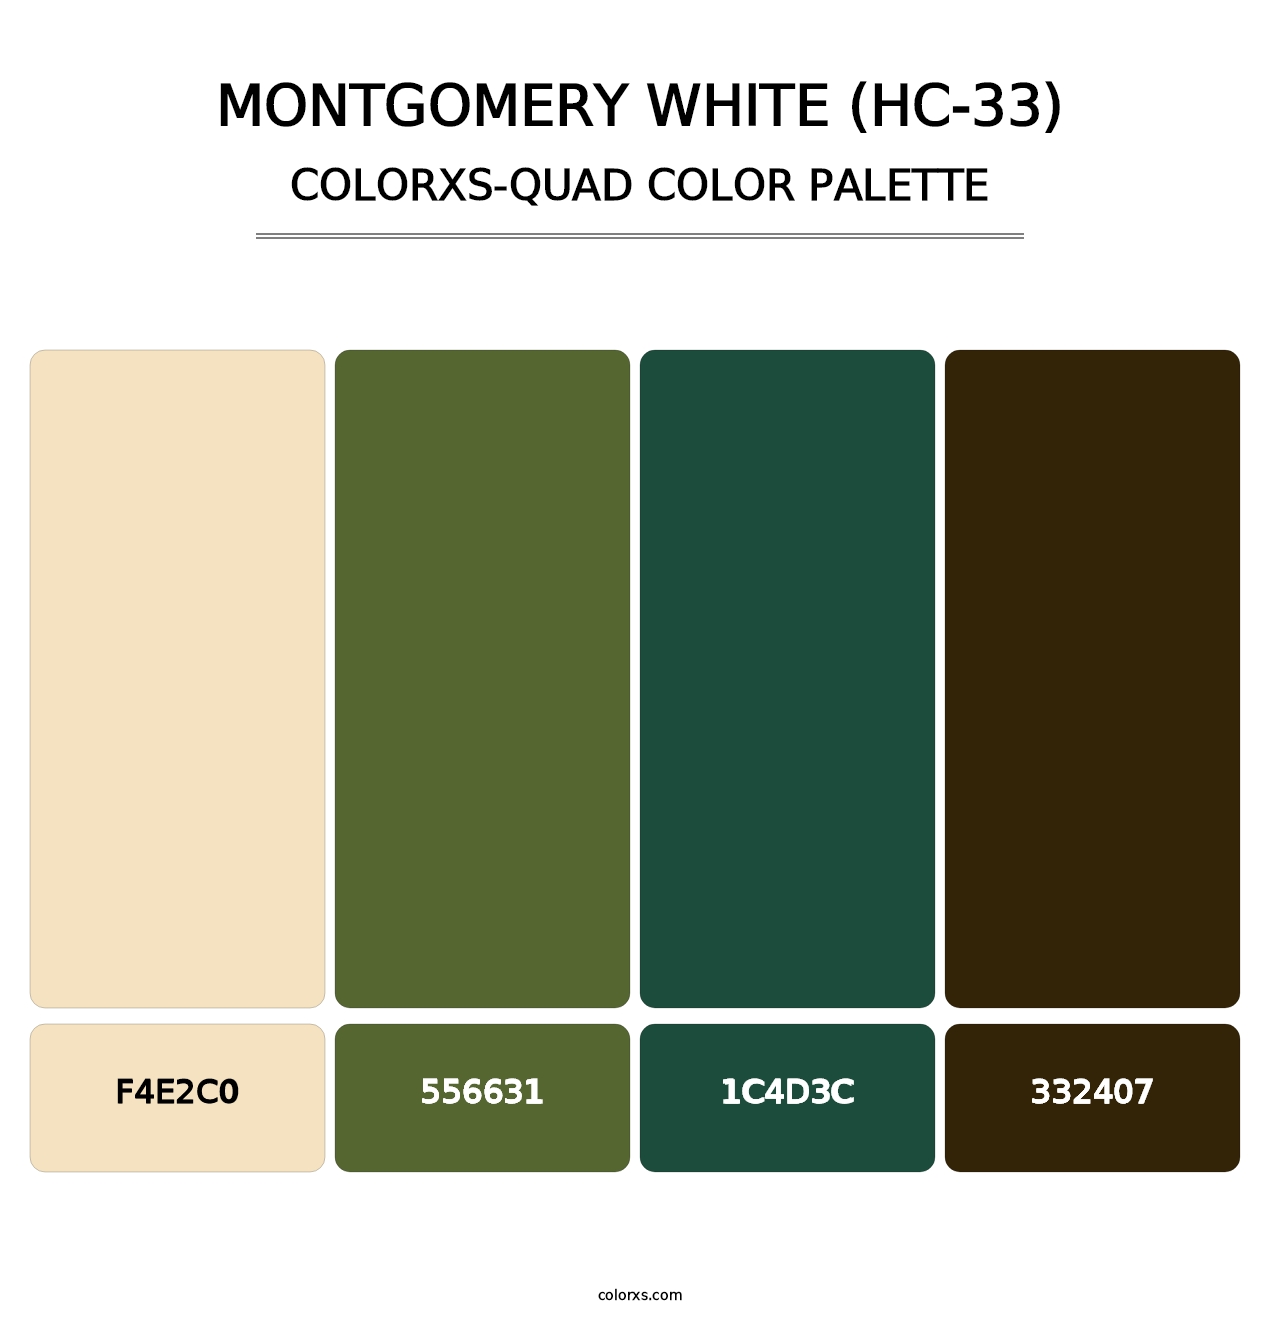 Montgomery White (HC-33) - Colorxs Quad Palette